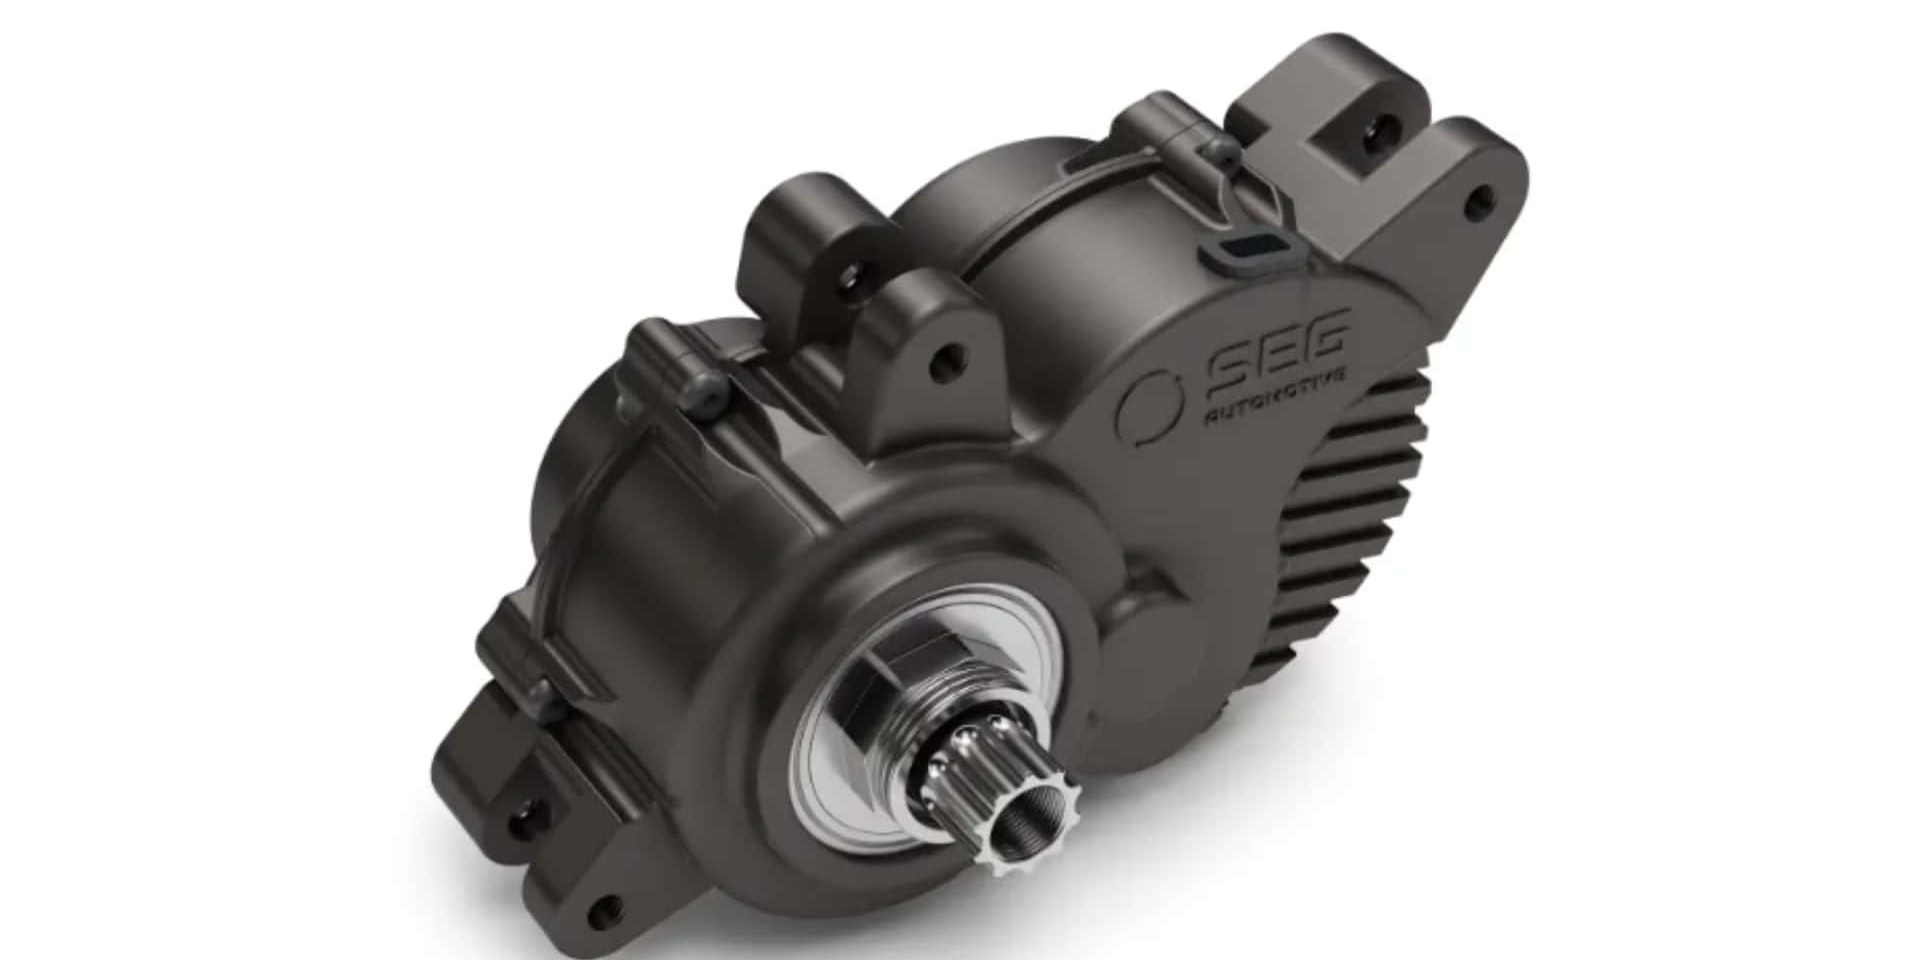 SEG Automotive 進軍電動自行車市場：2.6公斤、600W功率輸出的高性能電動馬達！